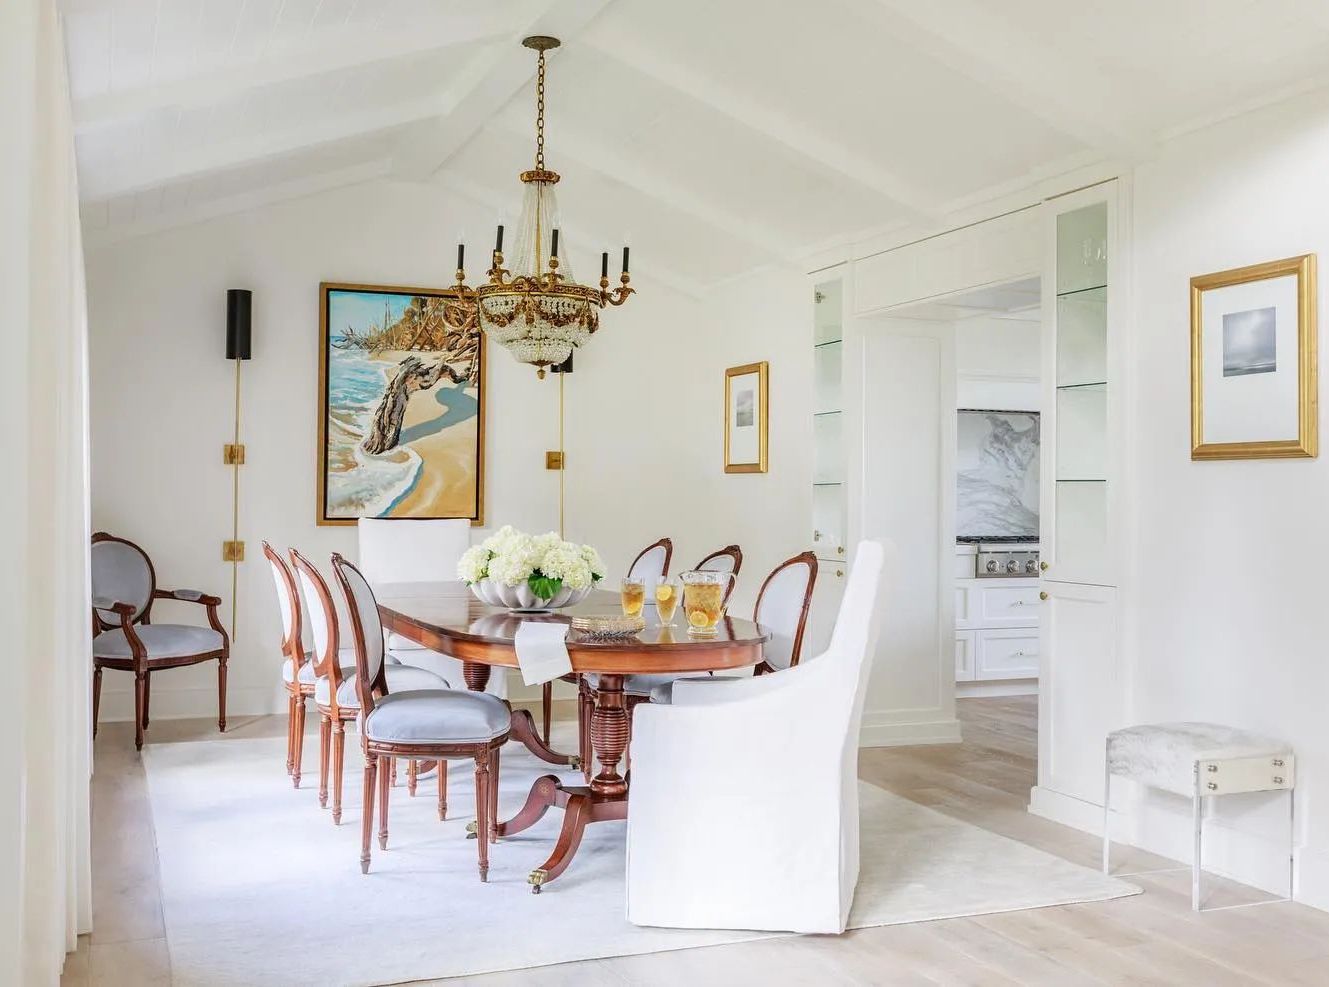 Traditional Coastal dining room design decor kendalldennisinteriors